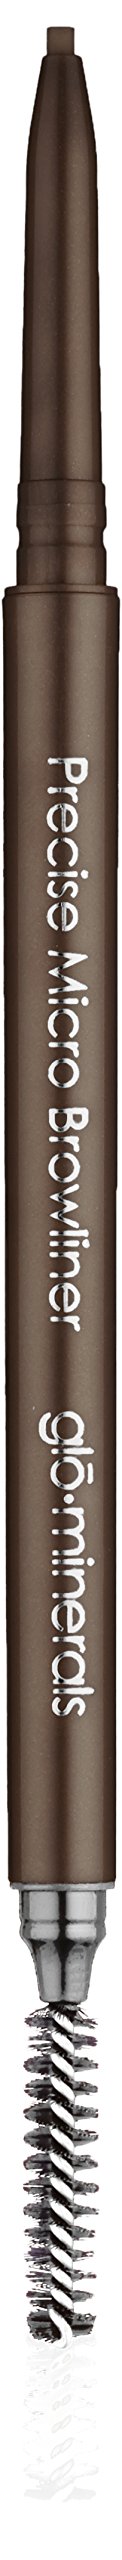 Glo Skin Beauty Precise Micro Browliner in Dark Brown - Fine Tip Precision Eyebrow Pencil - 6 Shades, Eye Brow Filler